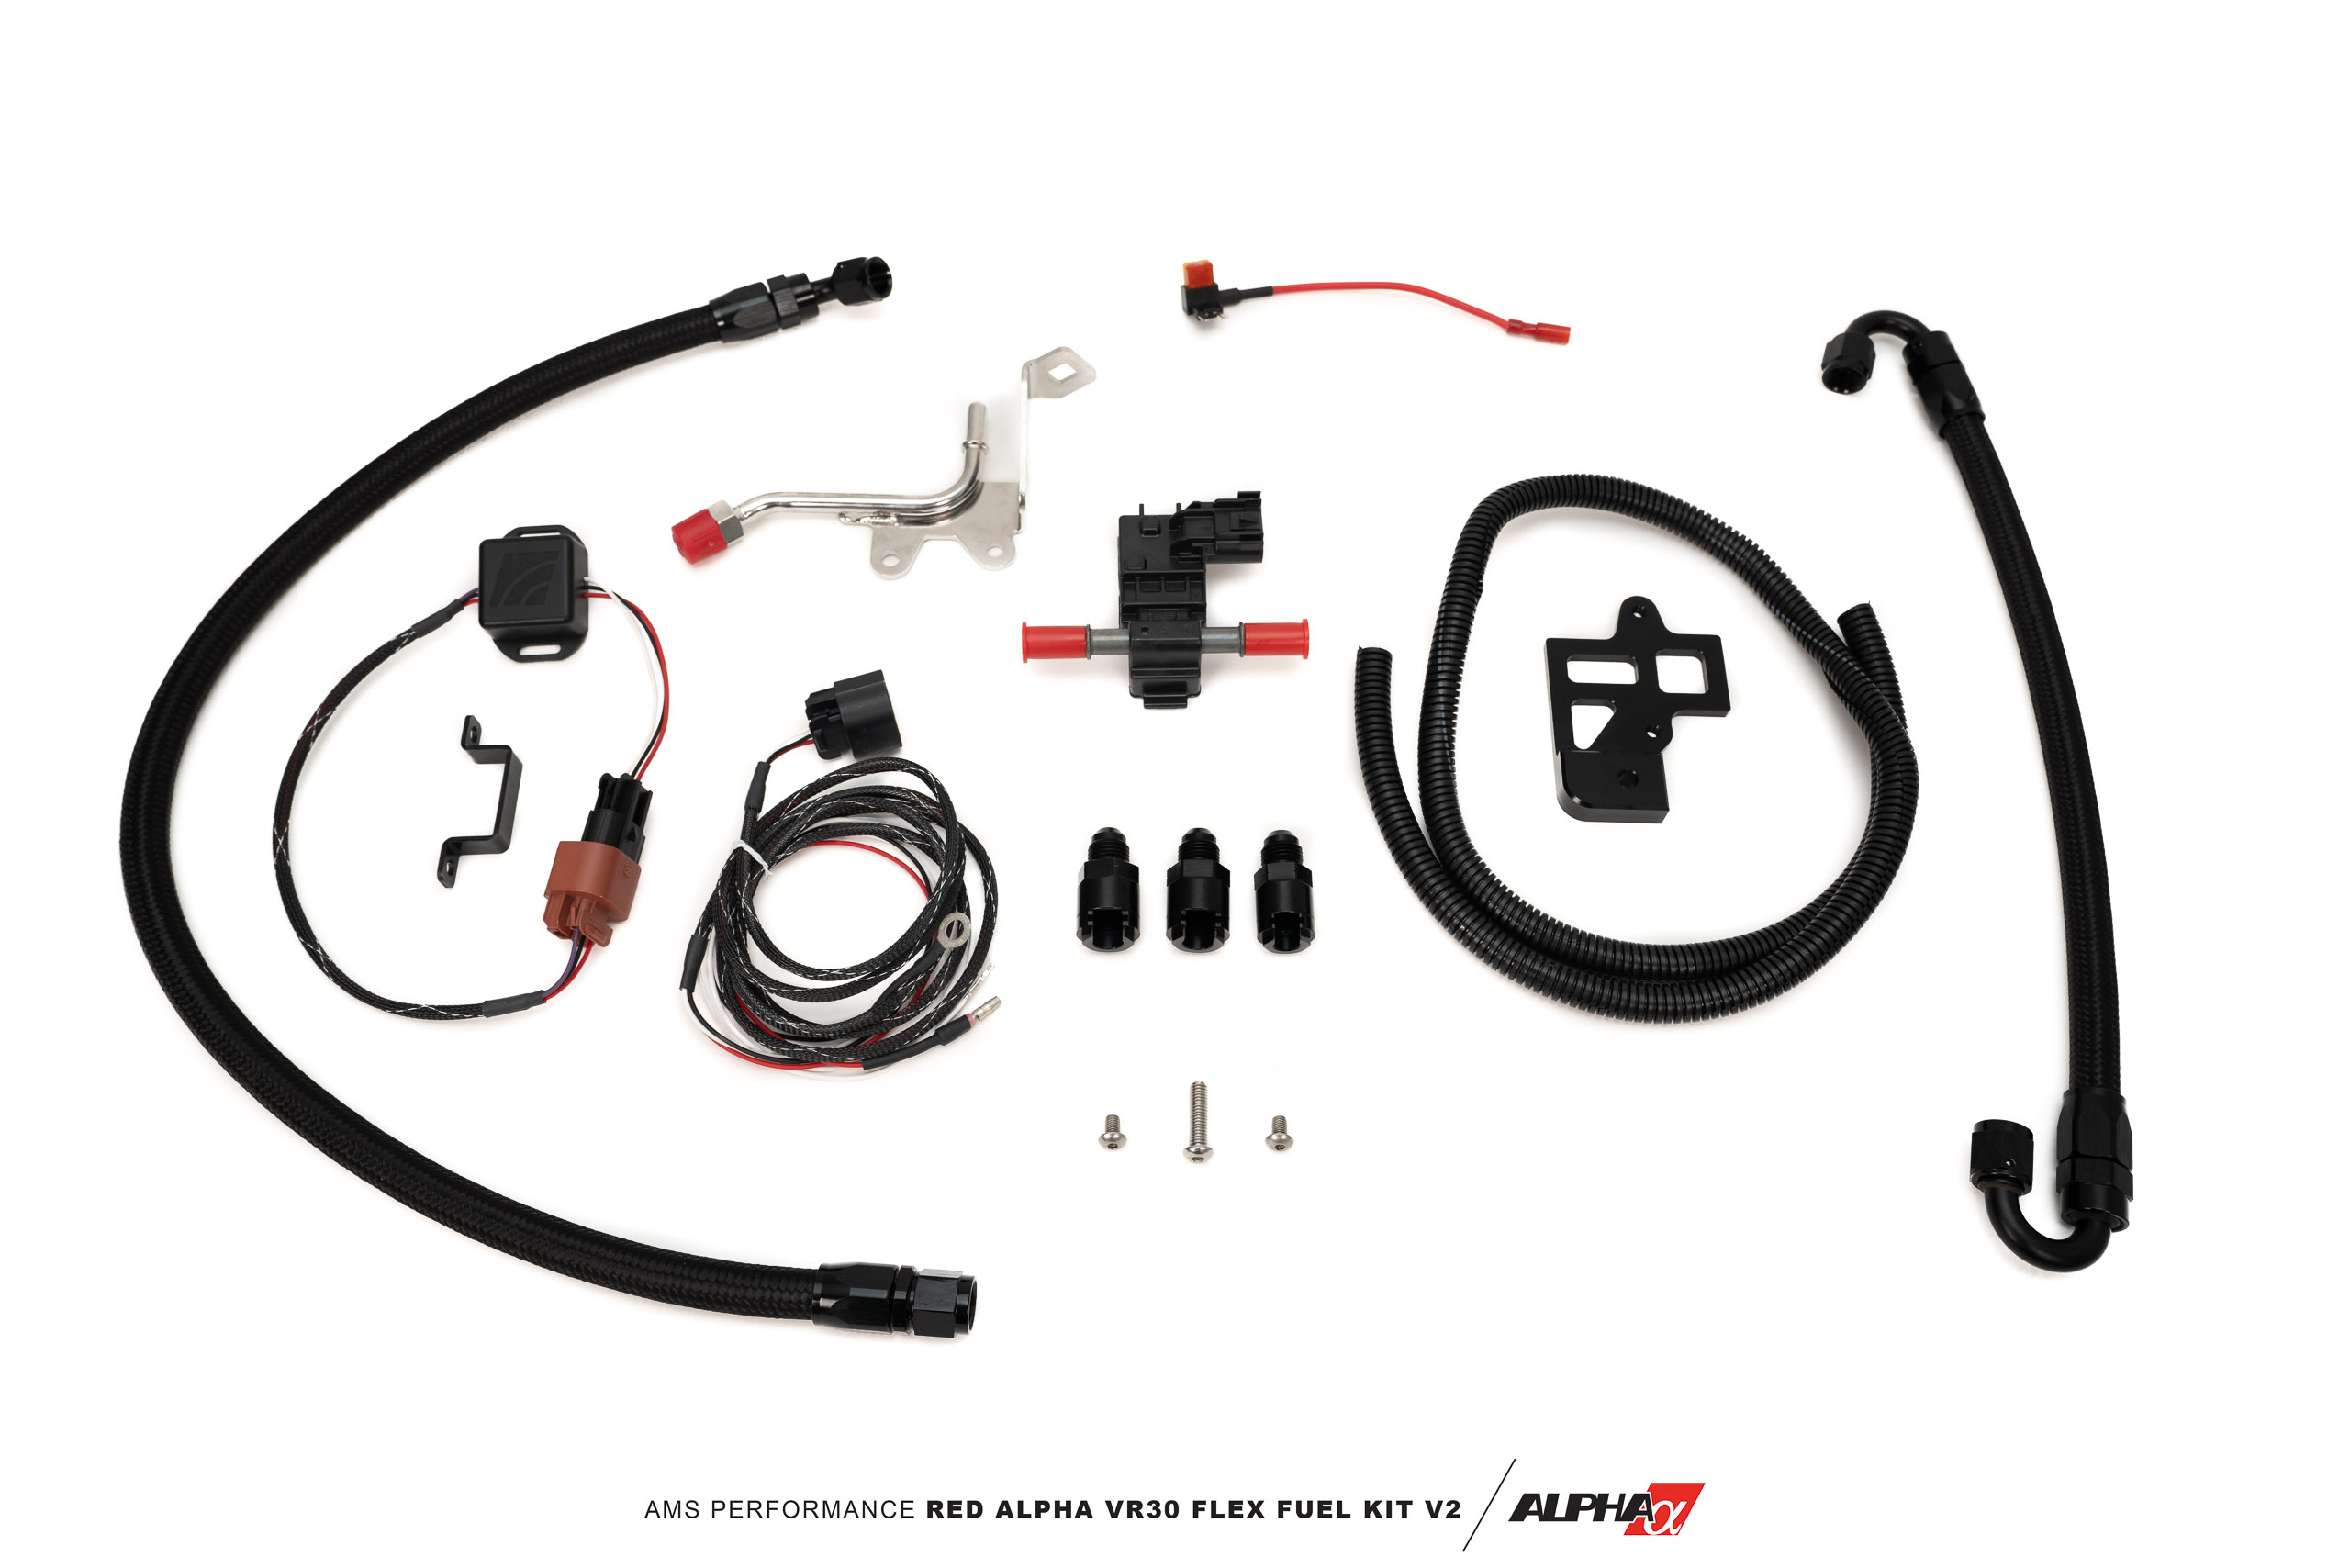 AMS Performance Q50/Q60 Red Alpha Flex Fuel Kit v2 - AMS Performance